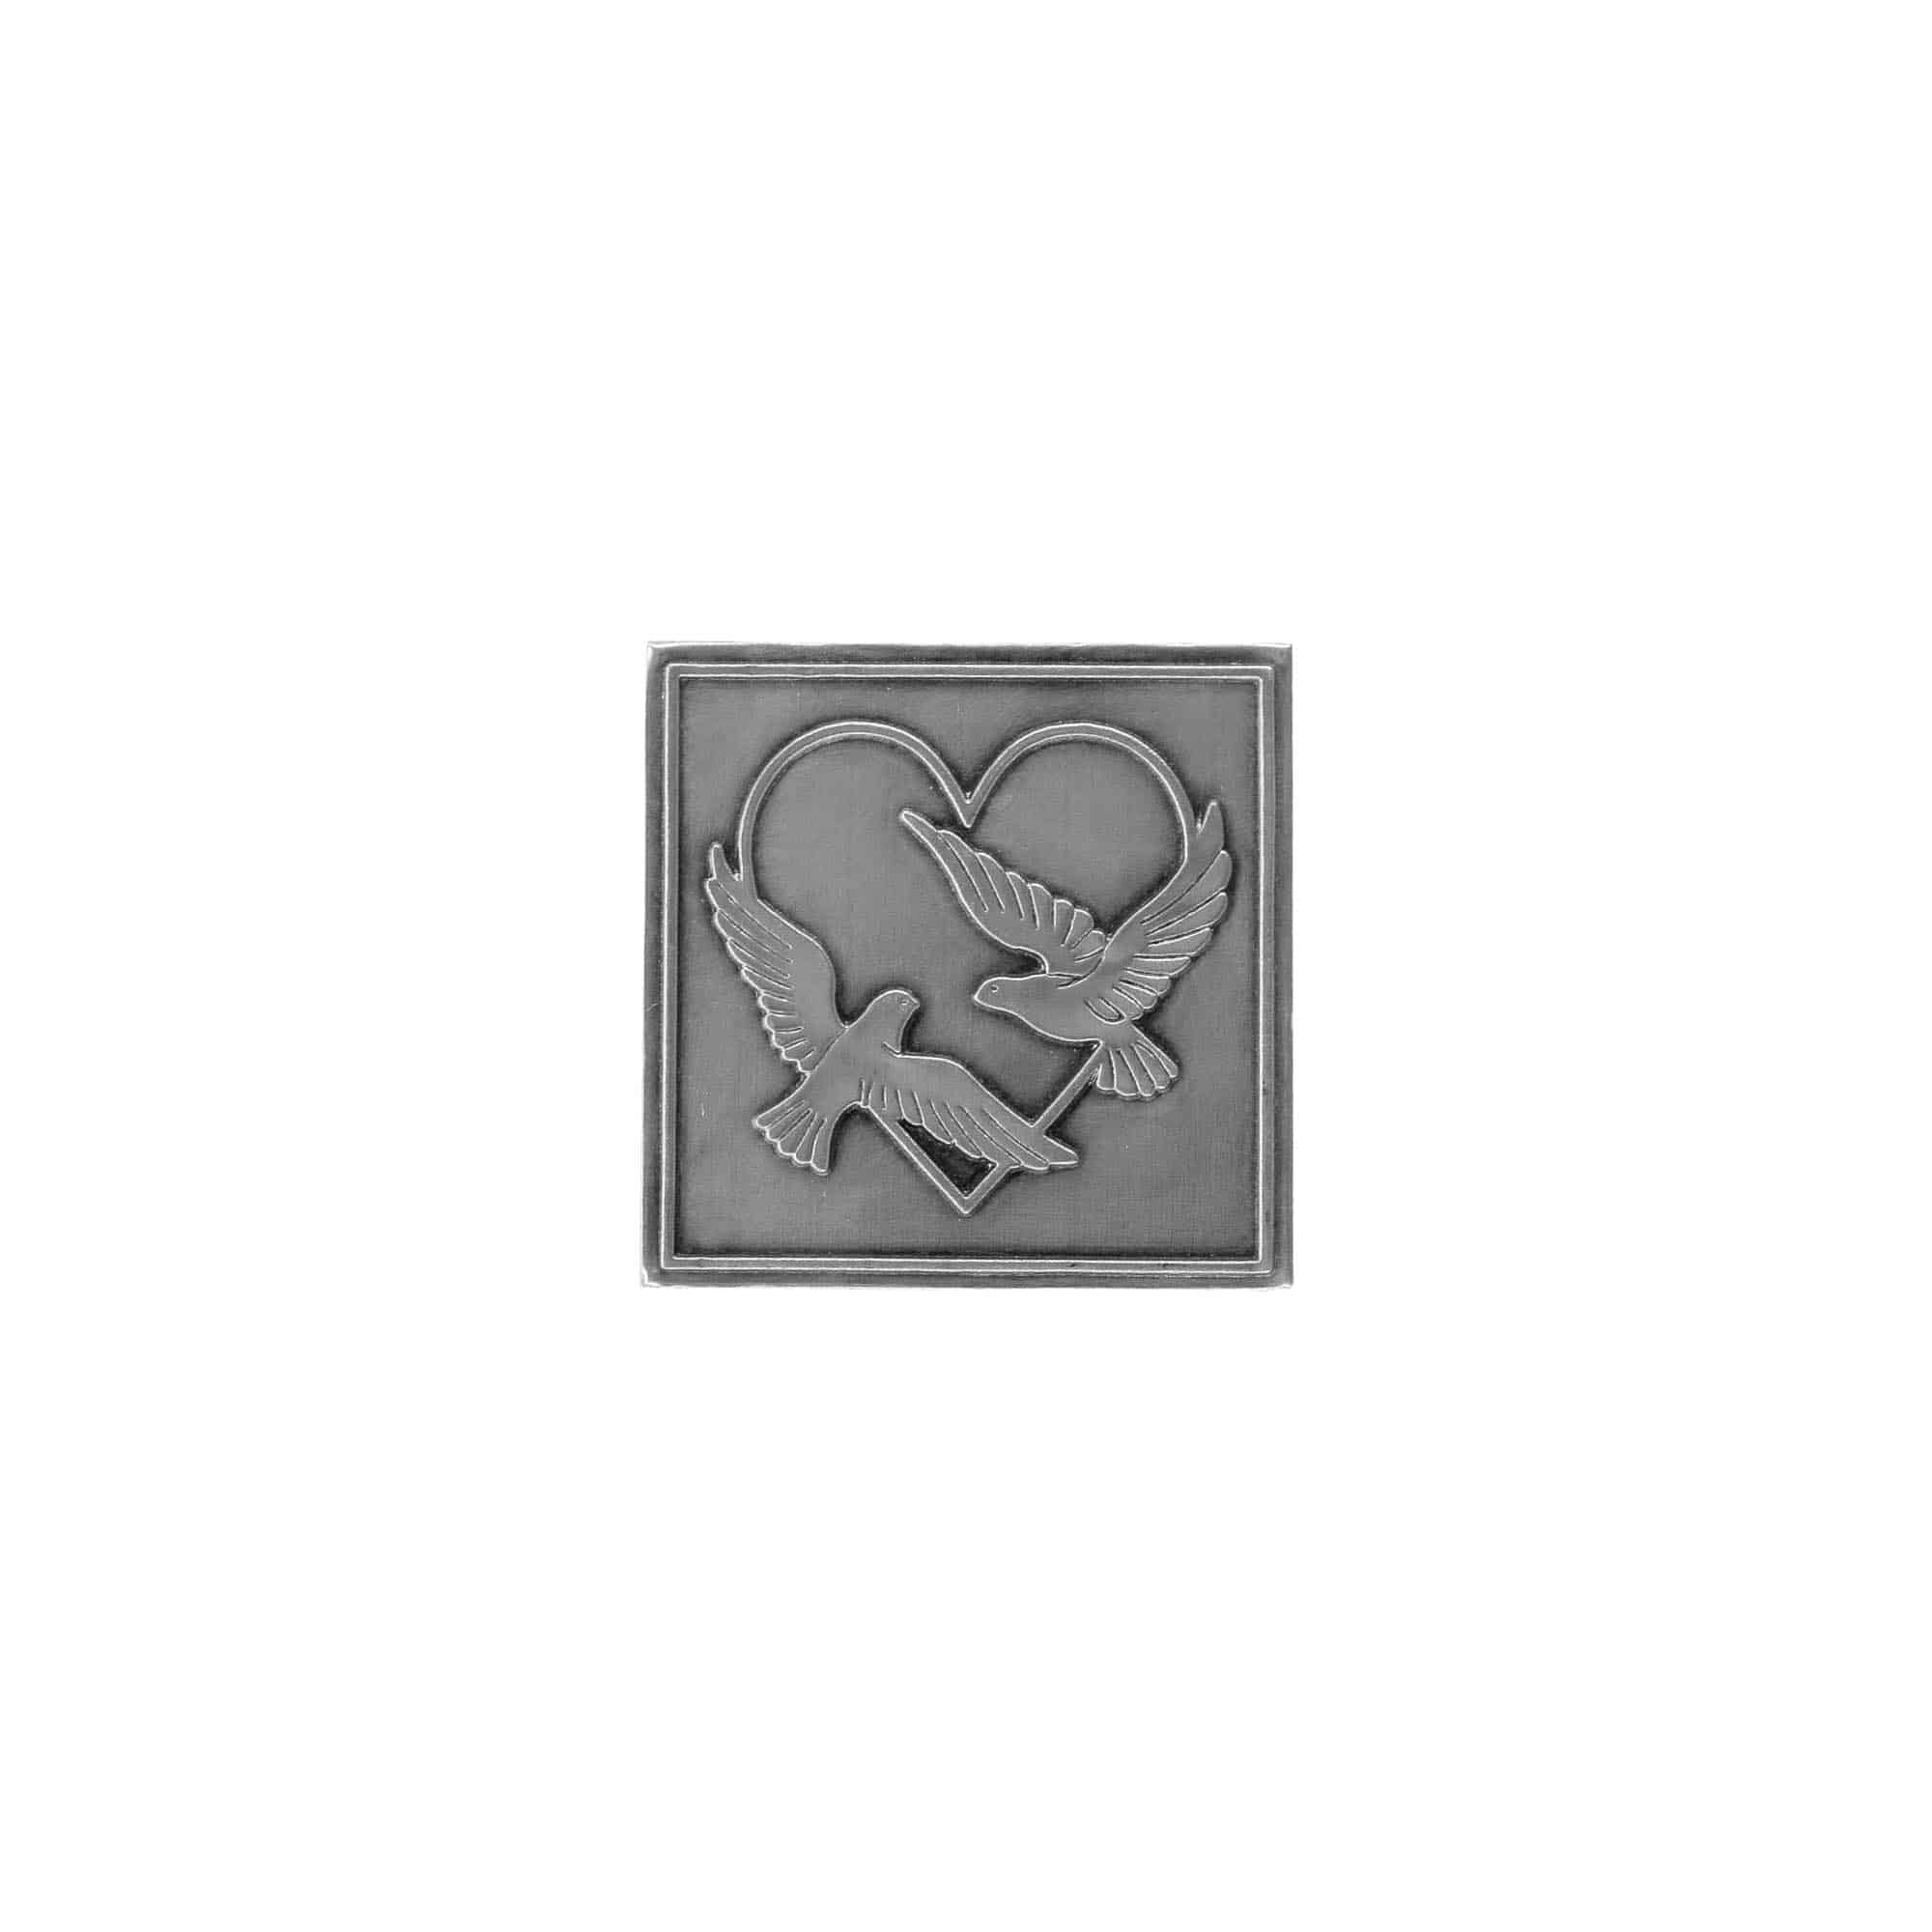 Cínový štítek 'Svatební holubice', čtvercový, kov, stříbrný